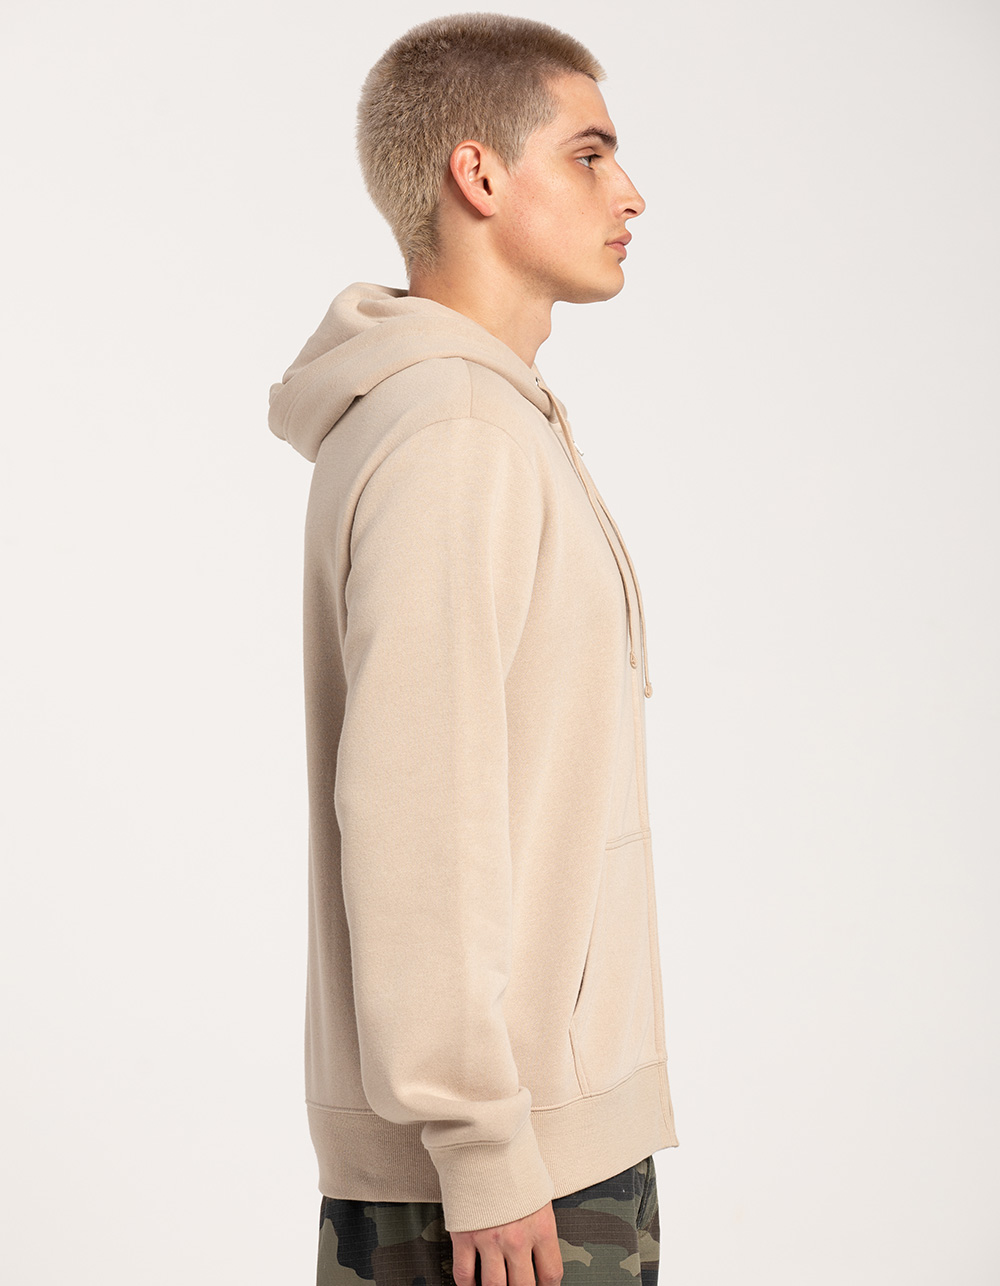 Grey Full Sleeves Fleece Track Suit Hoodie at Rs 585/piece in New